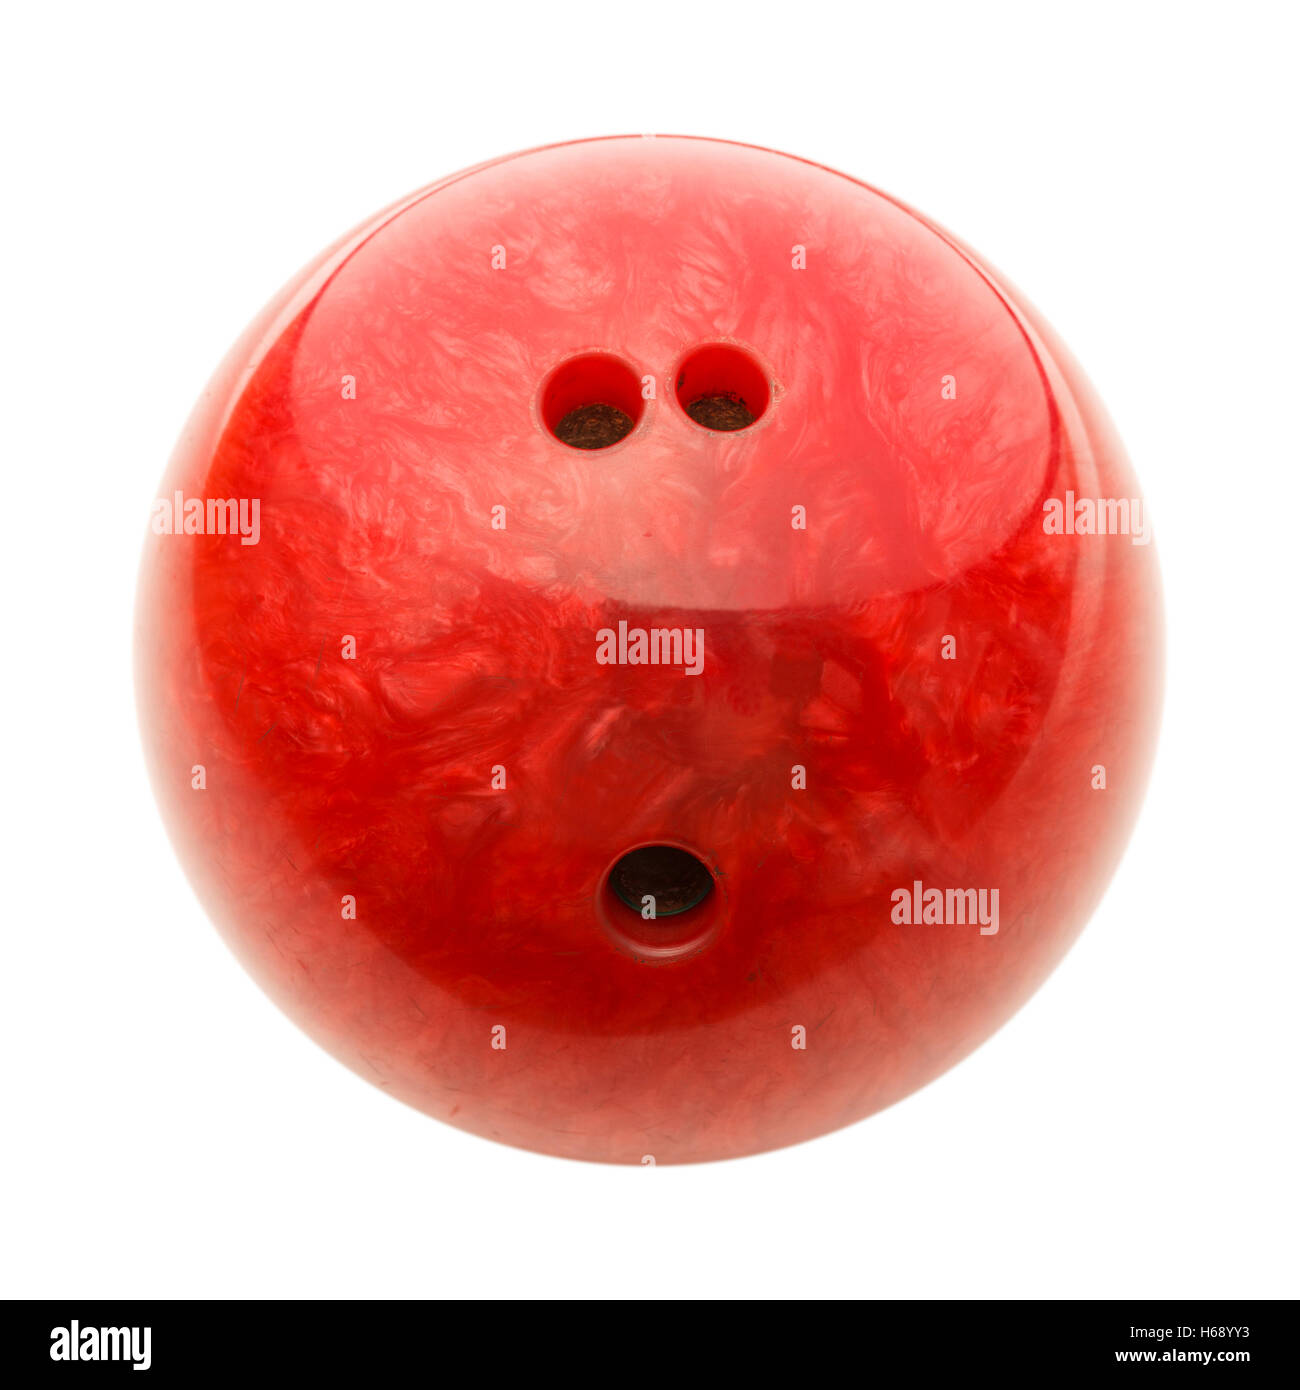 Bowlingkugel -Fotos und -Bildmaterial in hoher Auflösung – Alamy